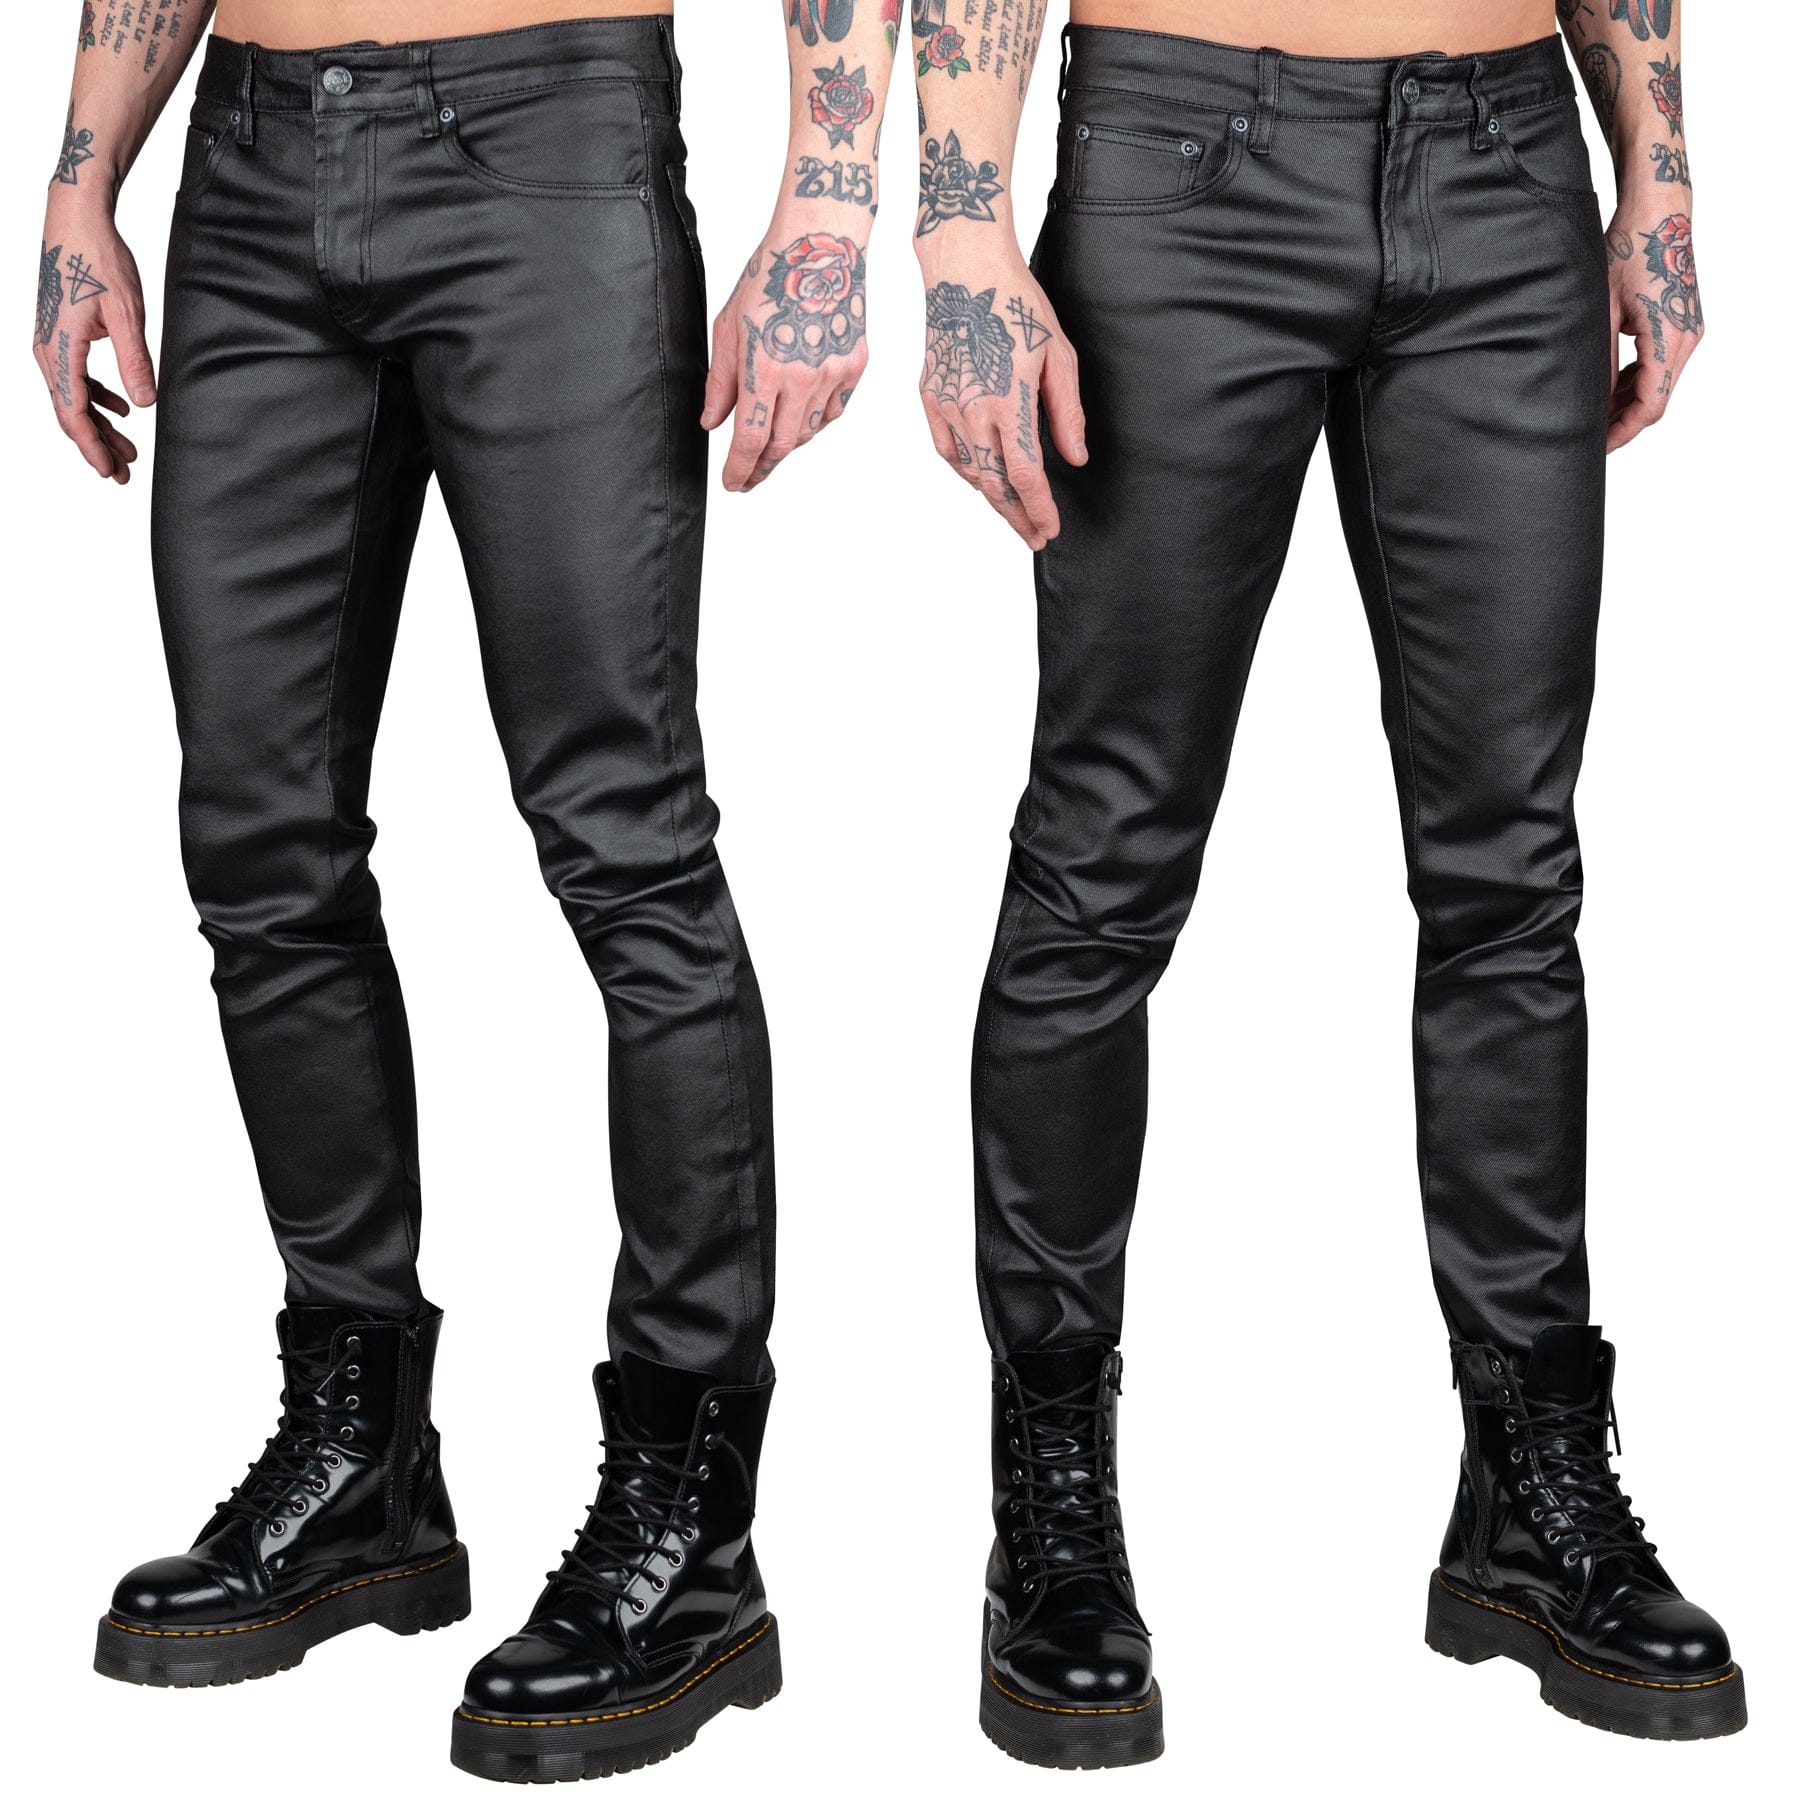 Wornstar Clothing Mens Jeans. Rampager Waxed Denim Jeans - Black